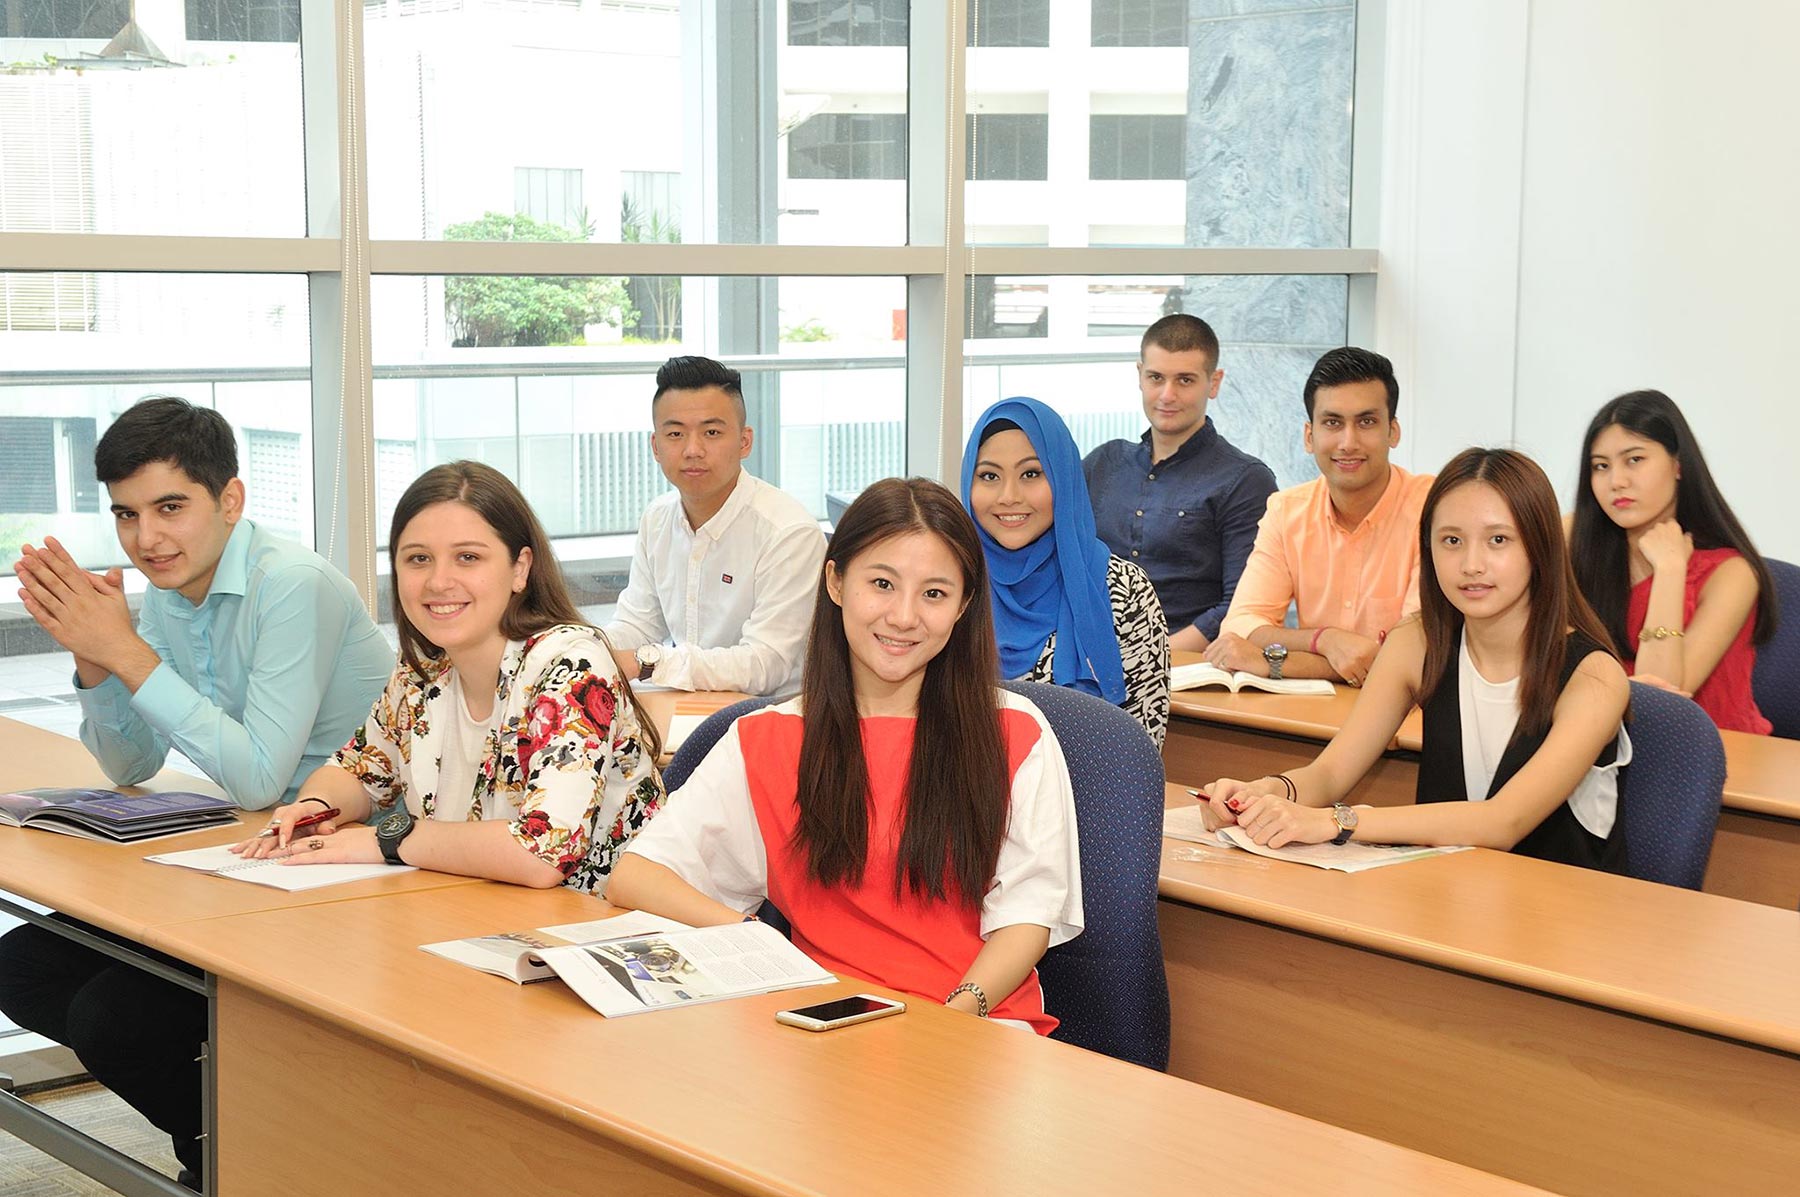 Бизнес школы россии. London School of Business and Finance Singapore. Бизнес школа. Студенты Сингапура. Колледжи в Сингапуре.